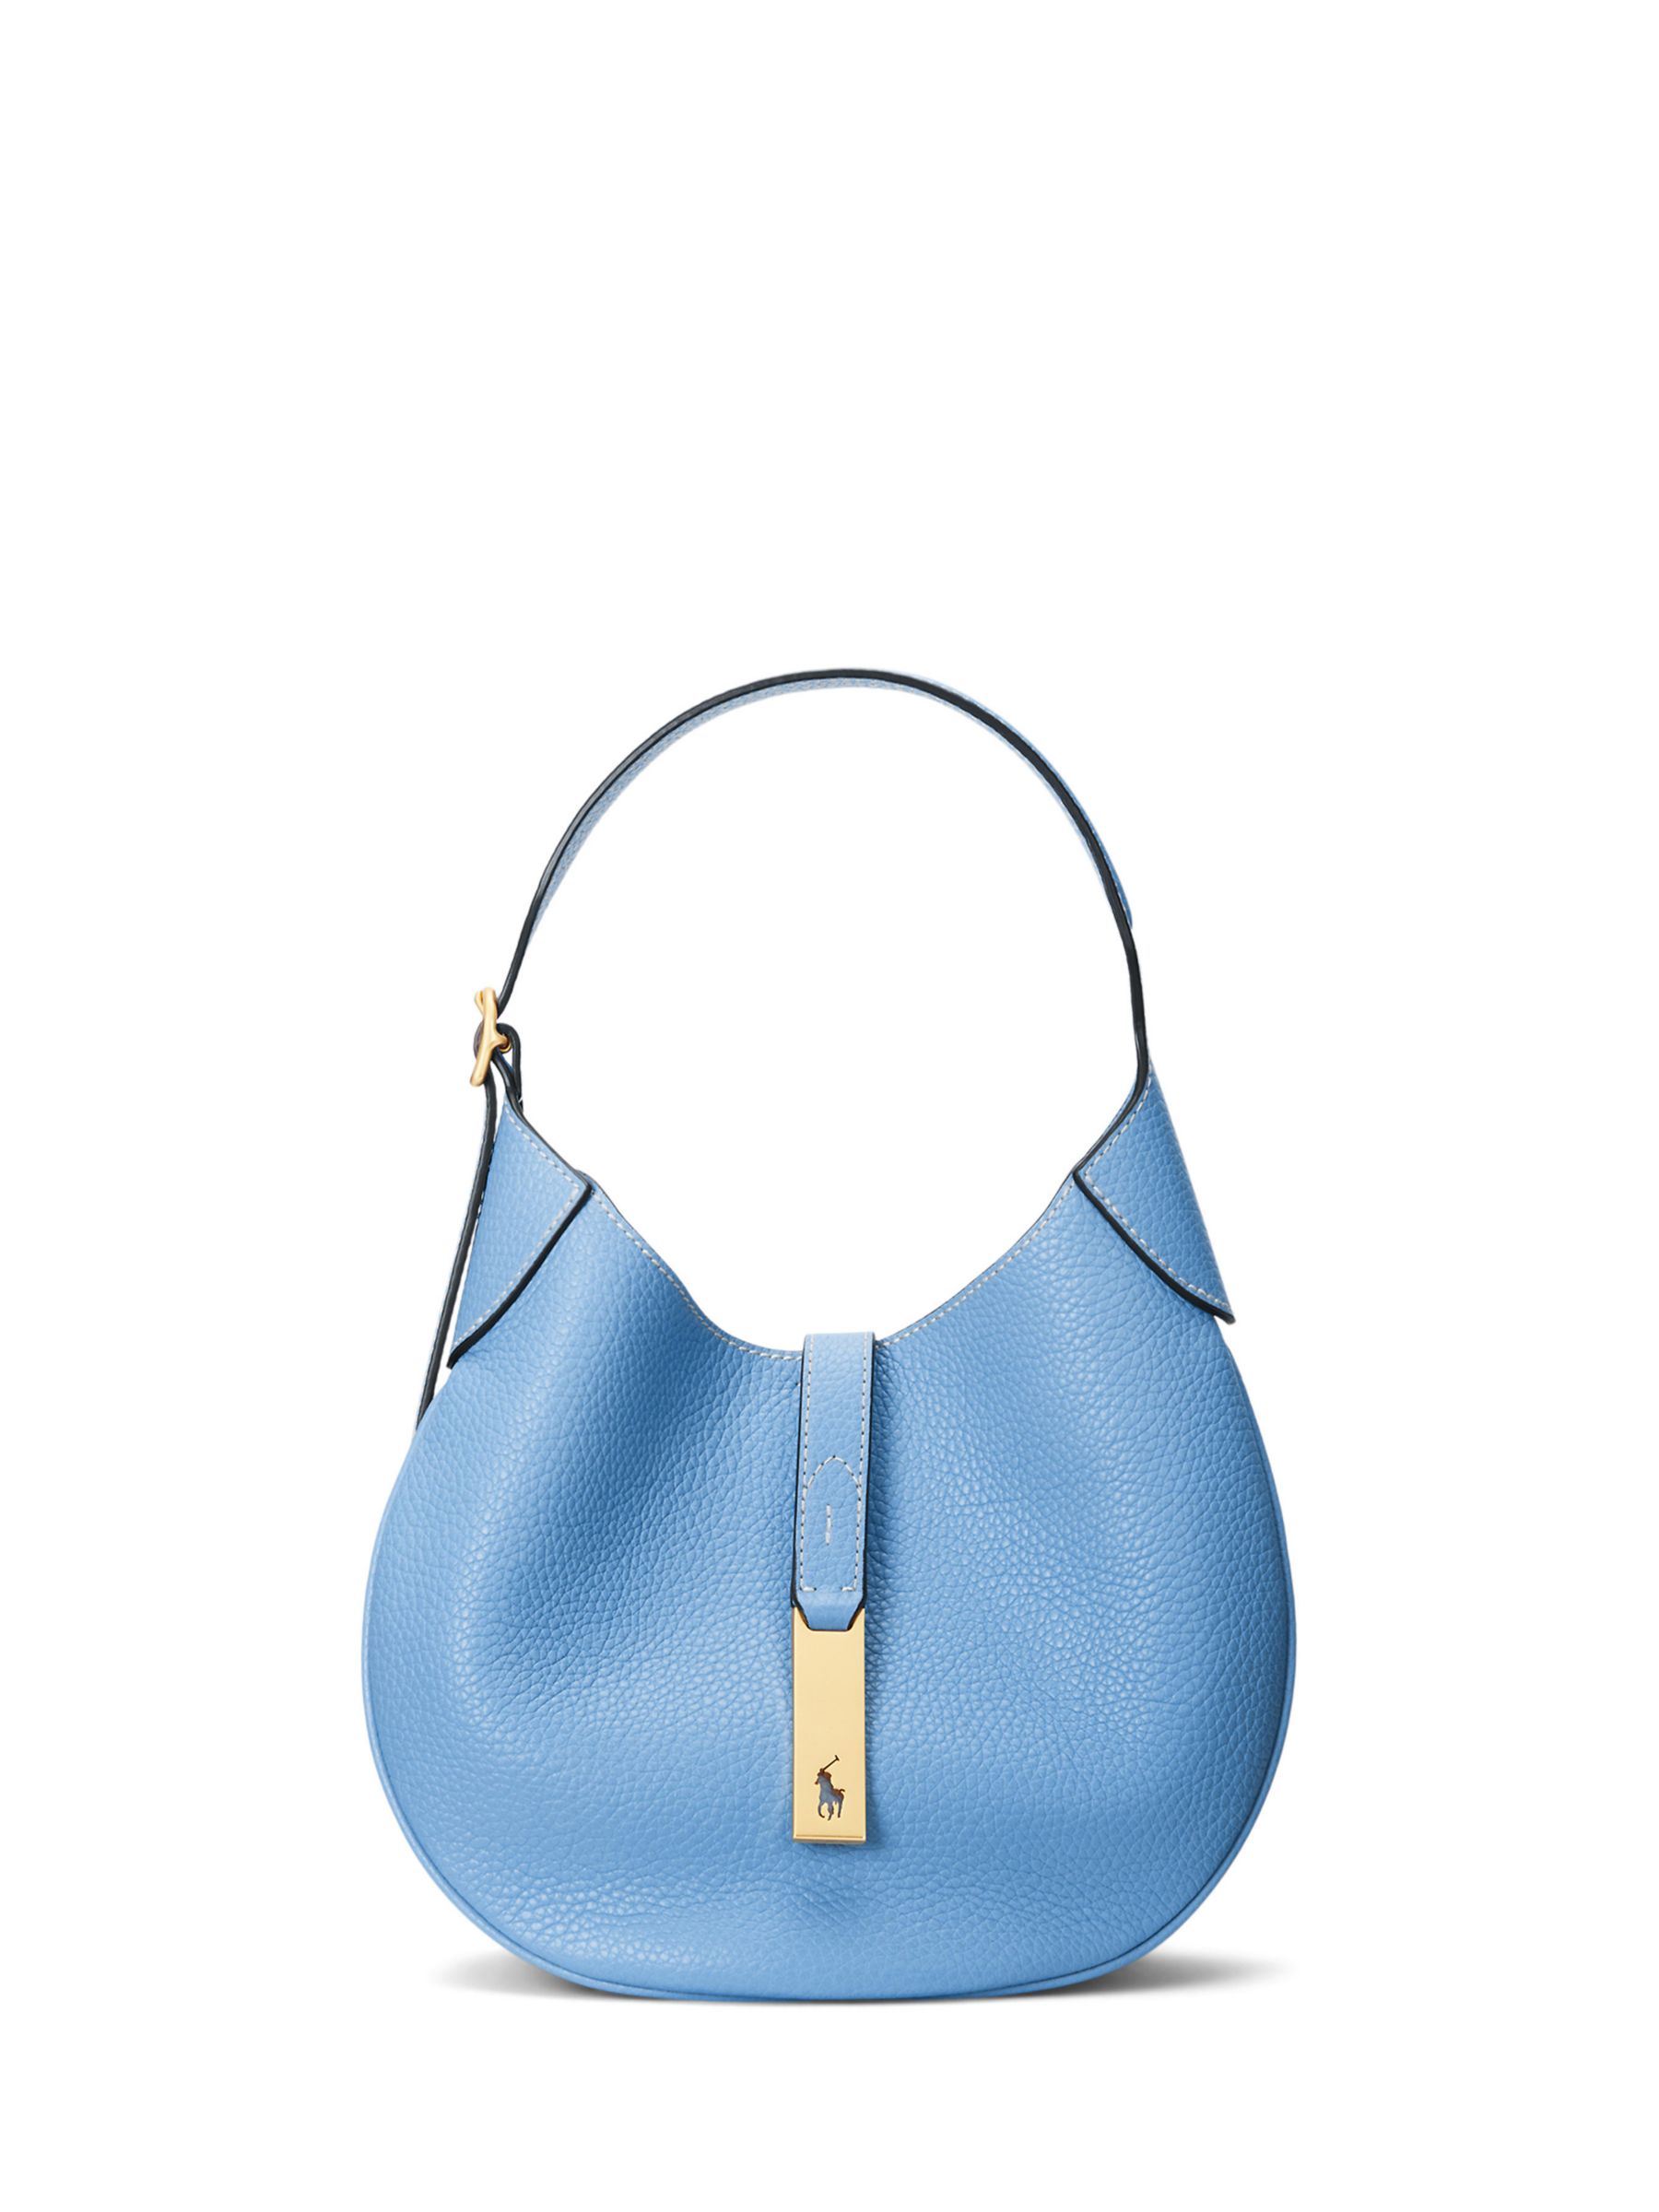 Buy Polo Ralph Lauren ID Small Leather Shoulder Bag, Azure Blue Online at johnlewis.com